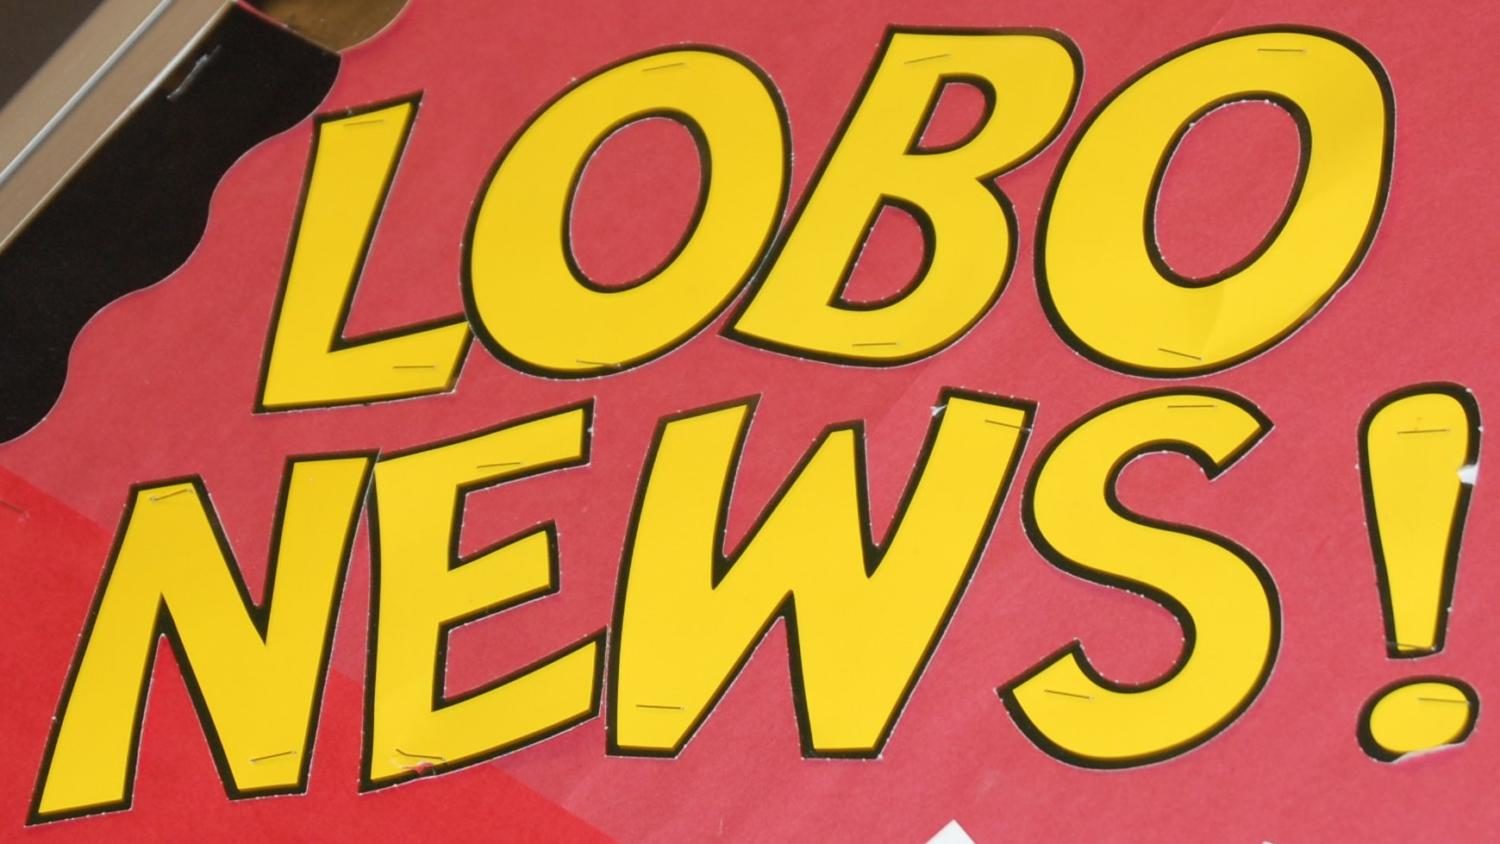 Lobo News poster.